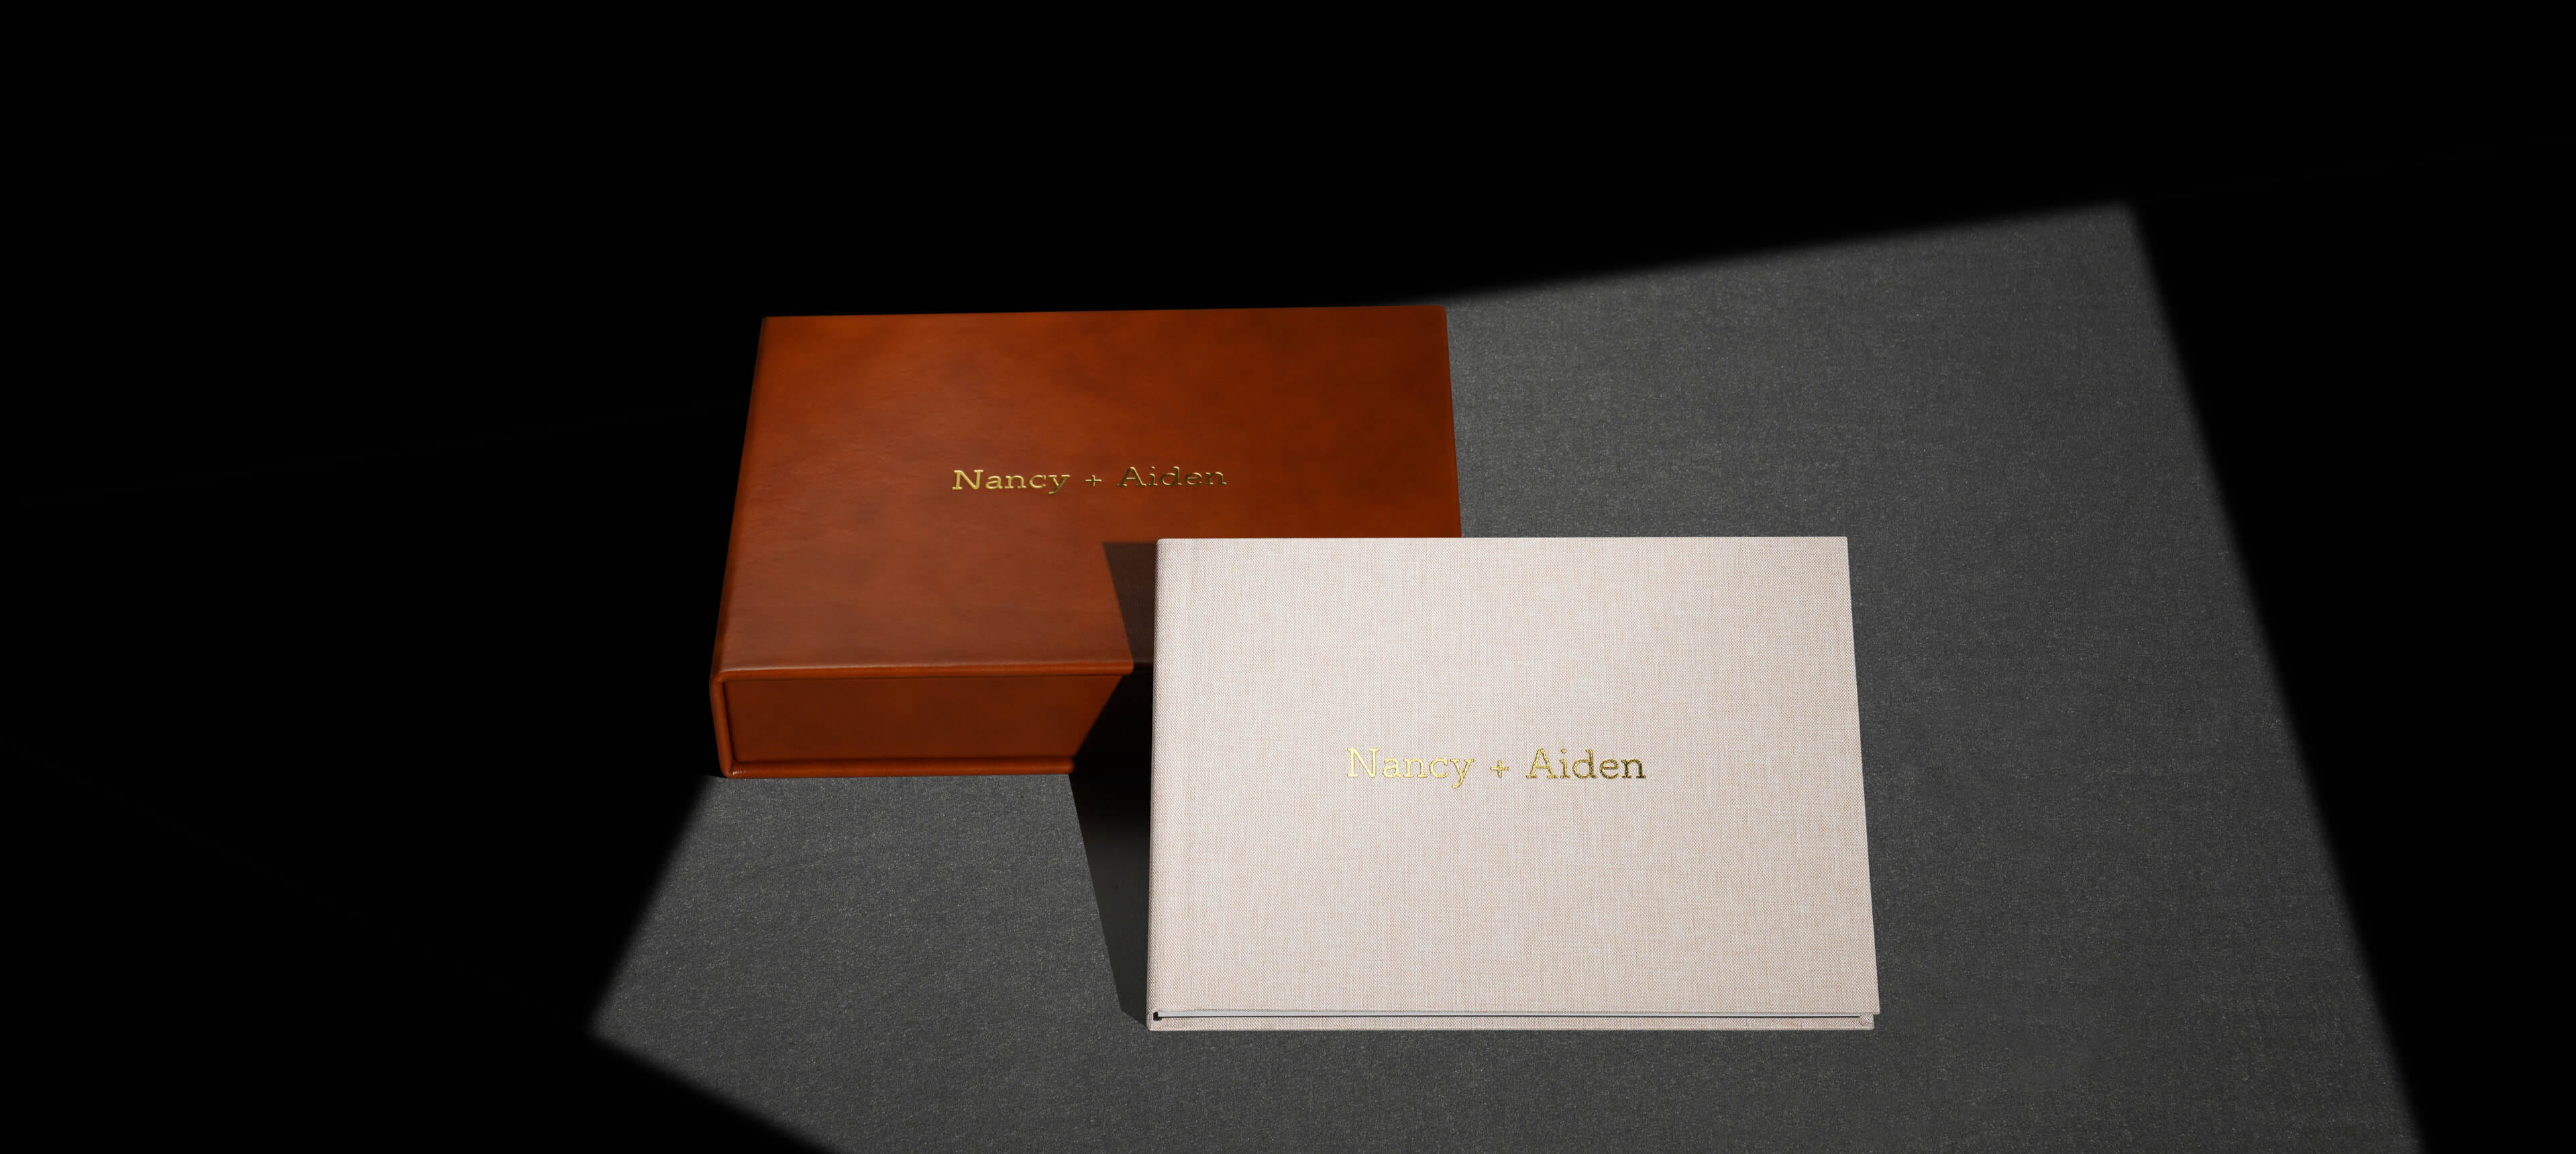 a presentation box album set showing showing a linen photo album leaning against a leather box